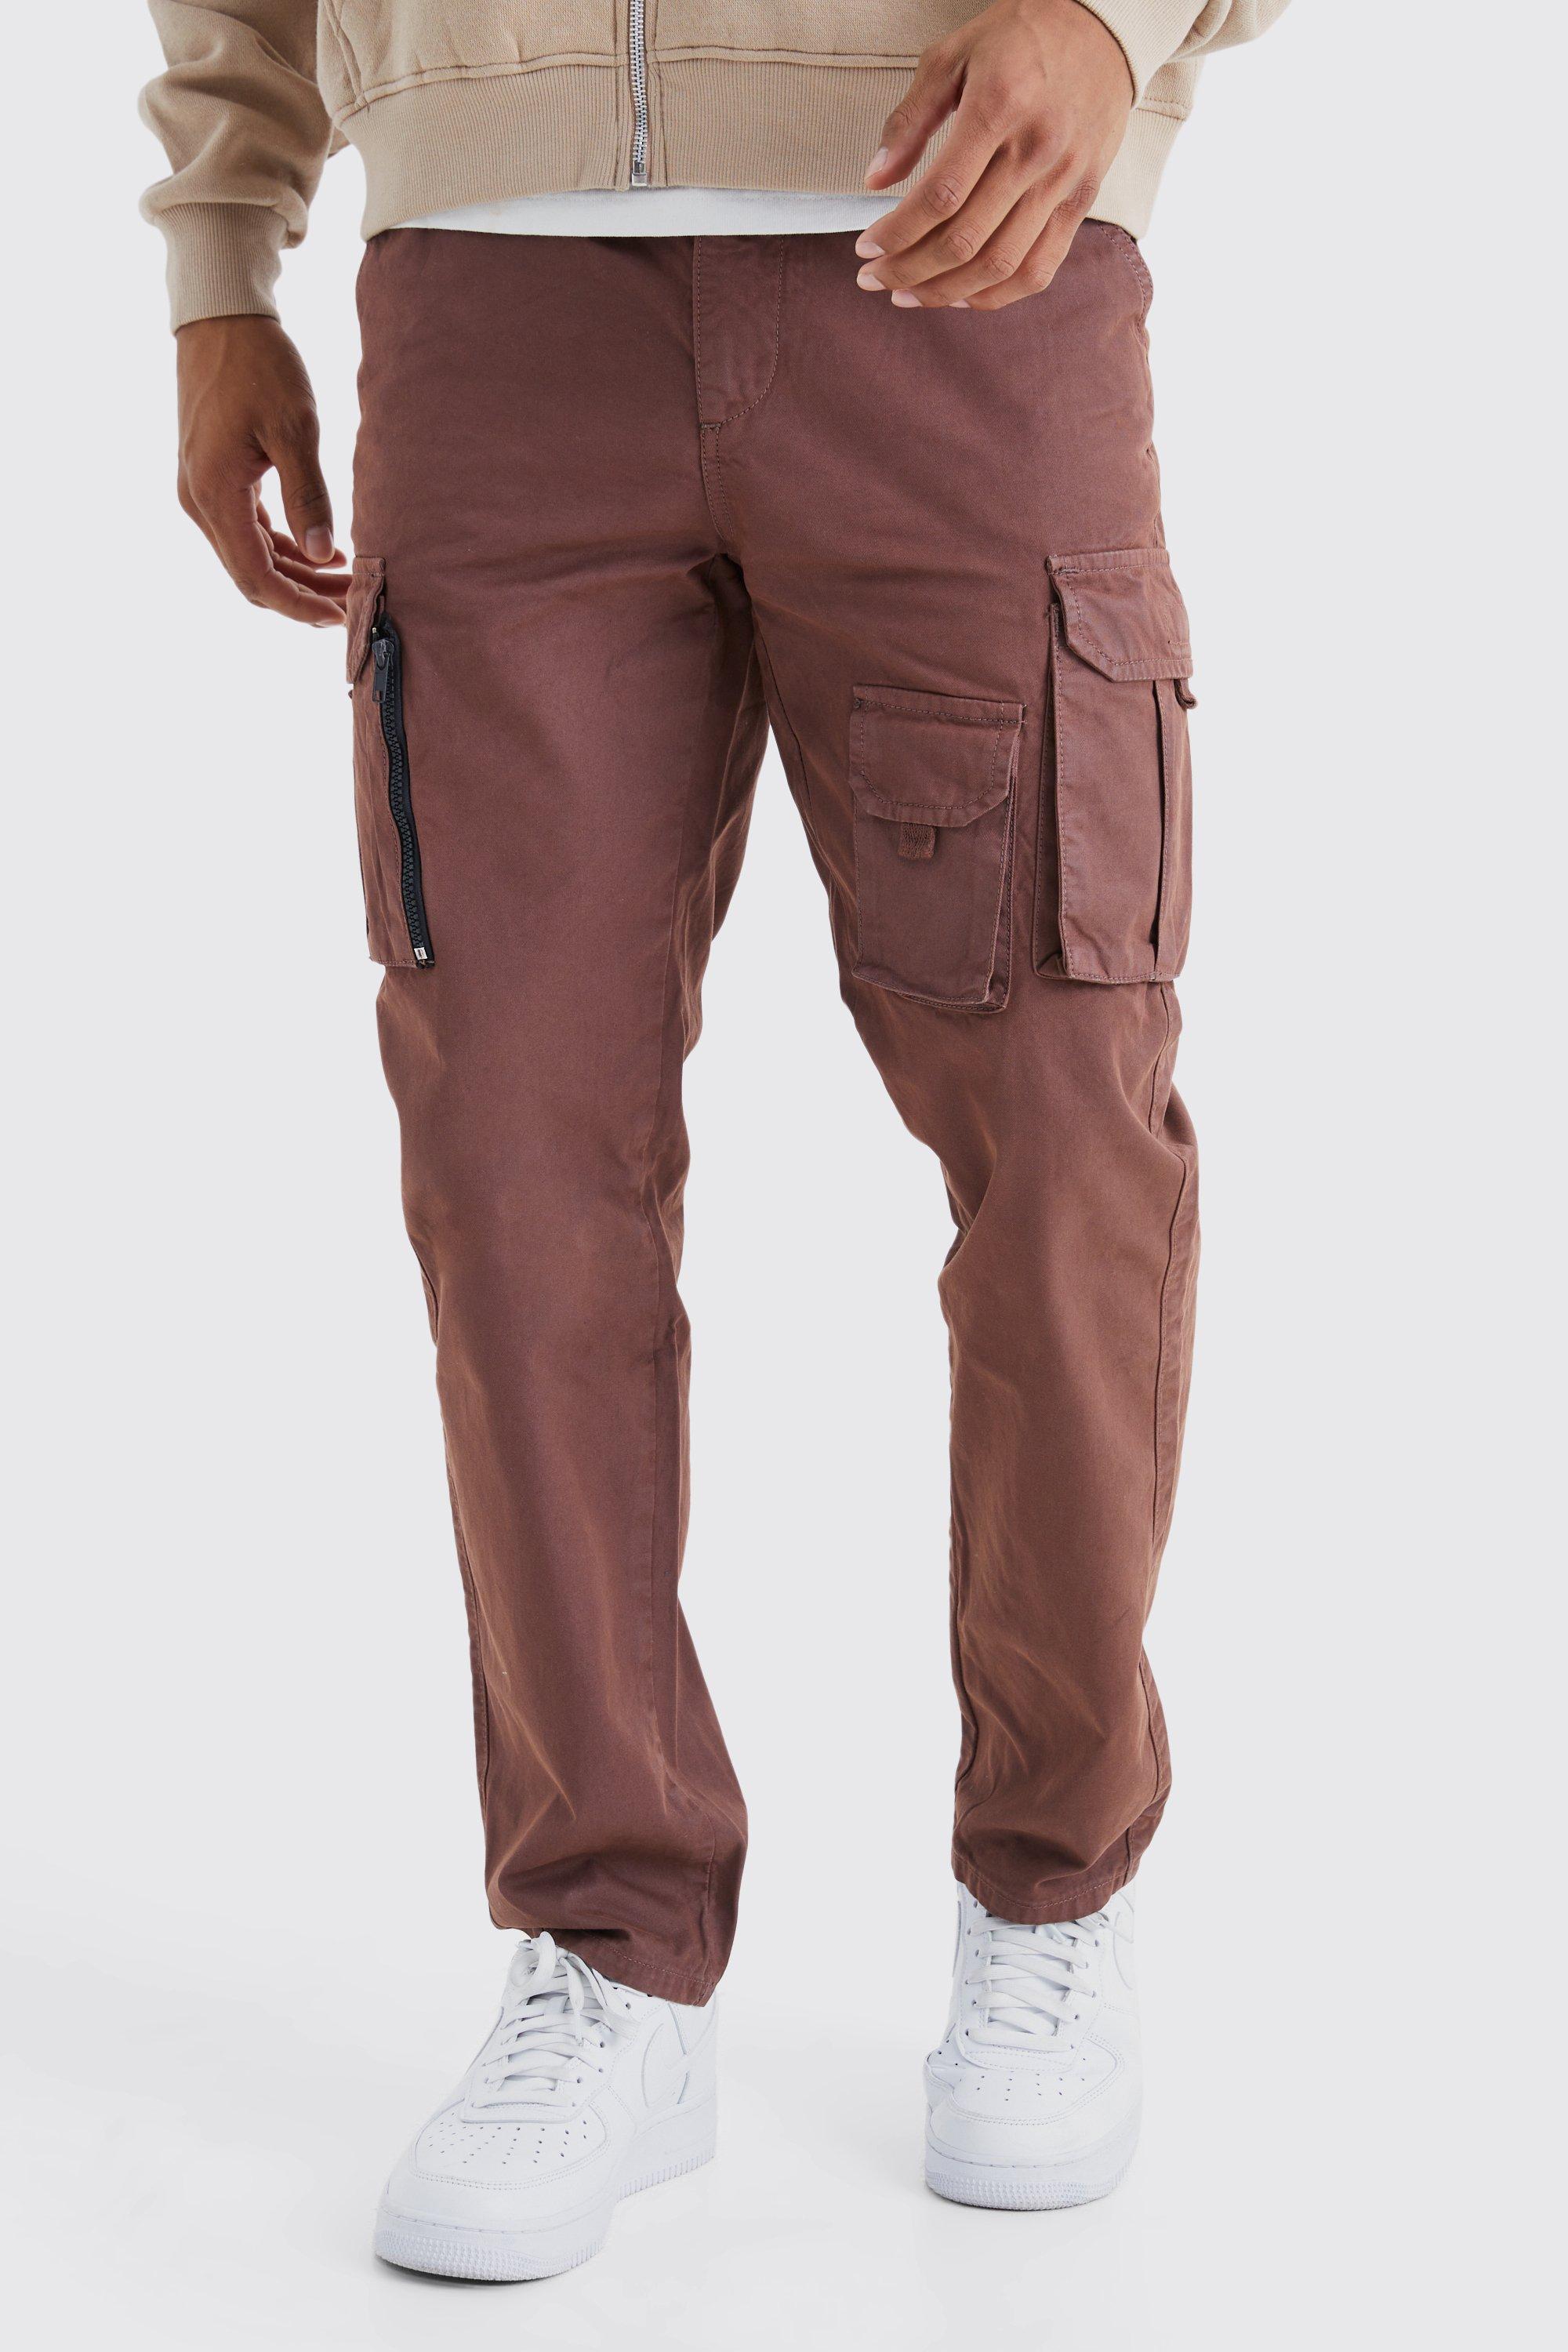 pantalon cargo droit homme - brun - 32, brun